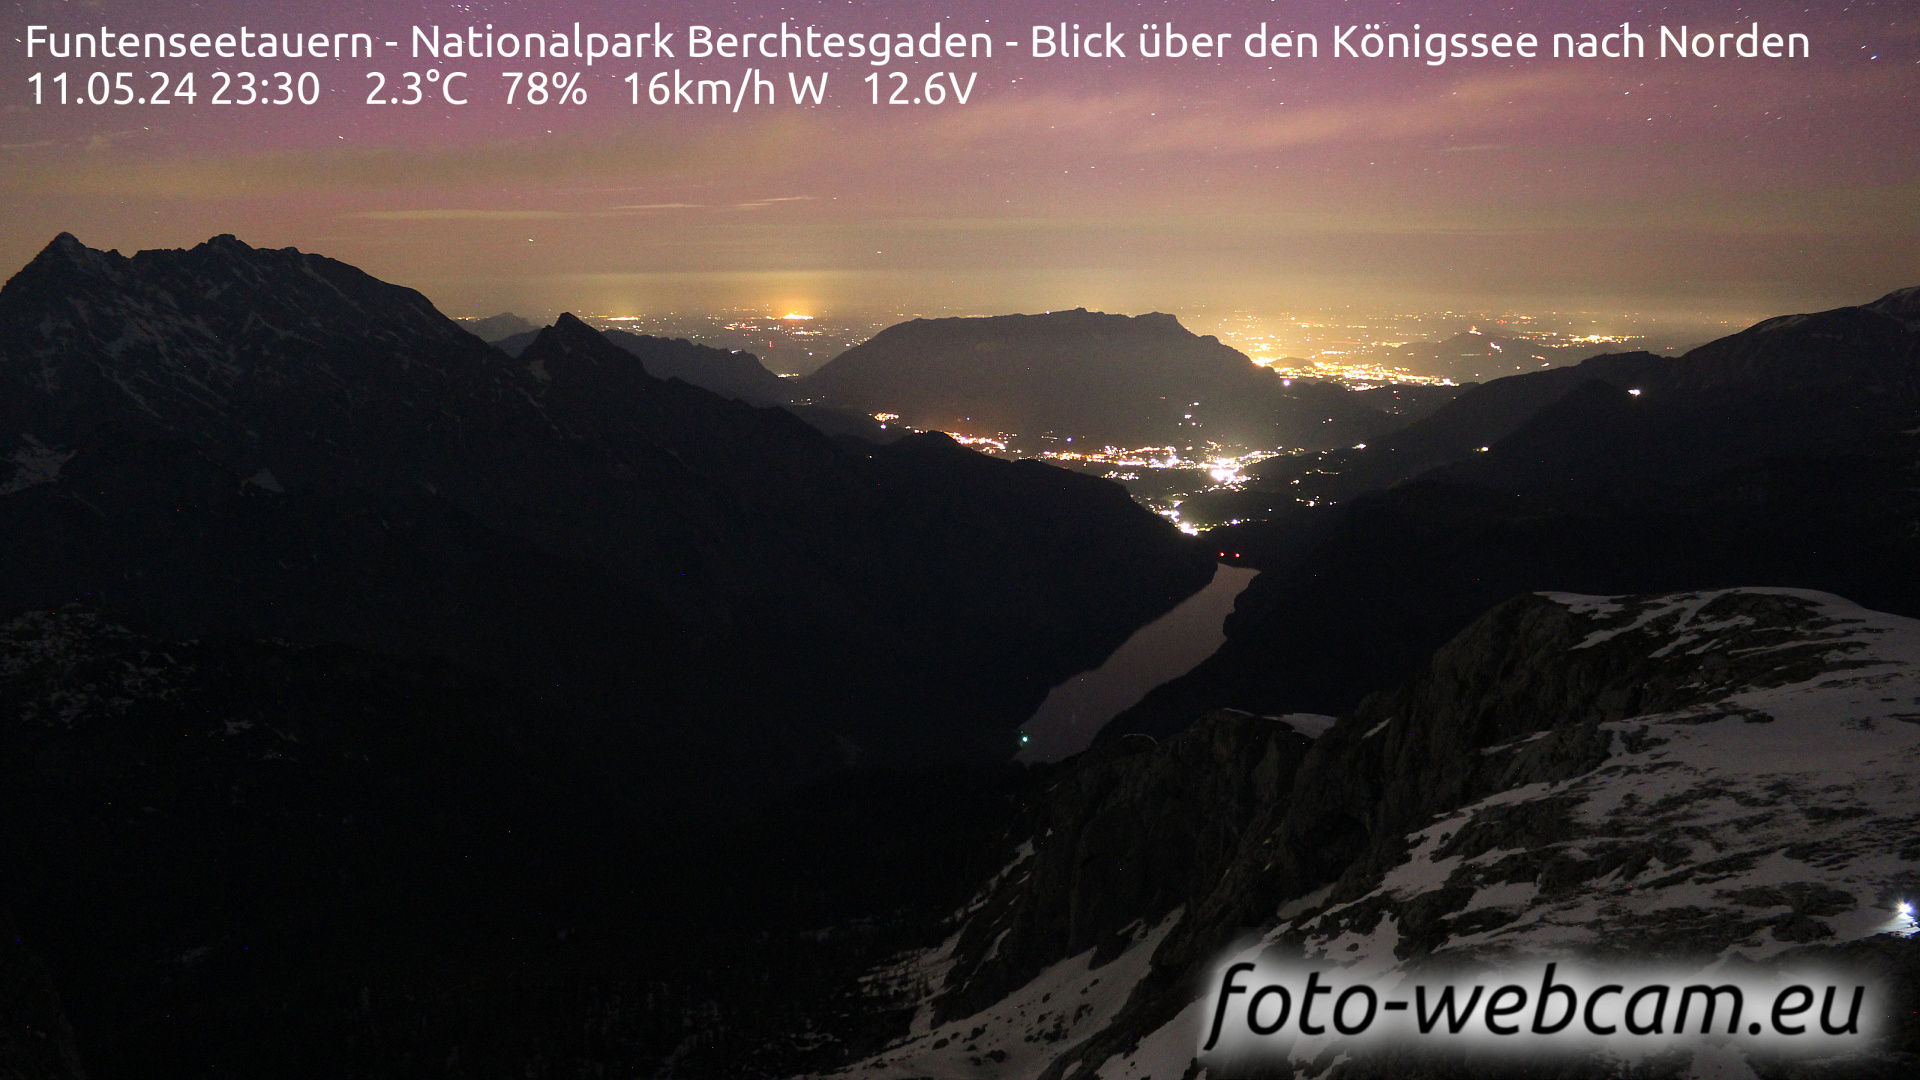 Berchtesgaden Me. 23:48